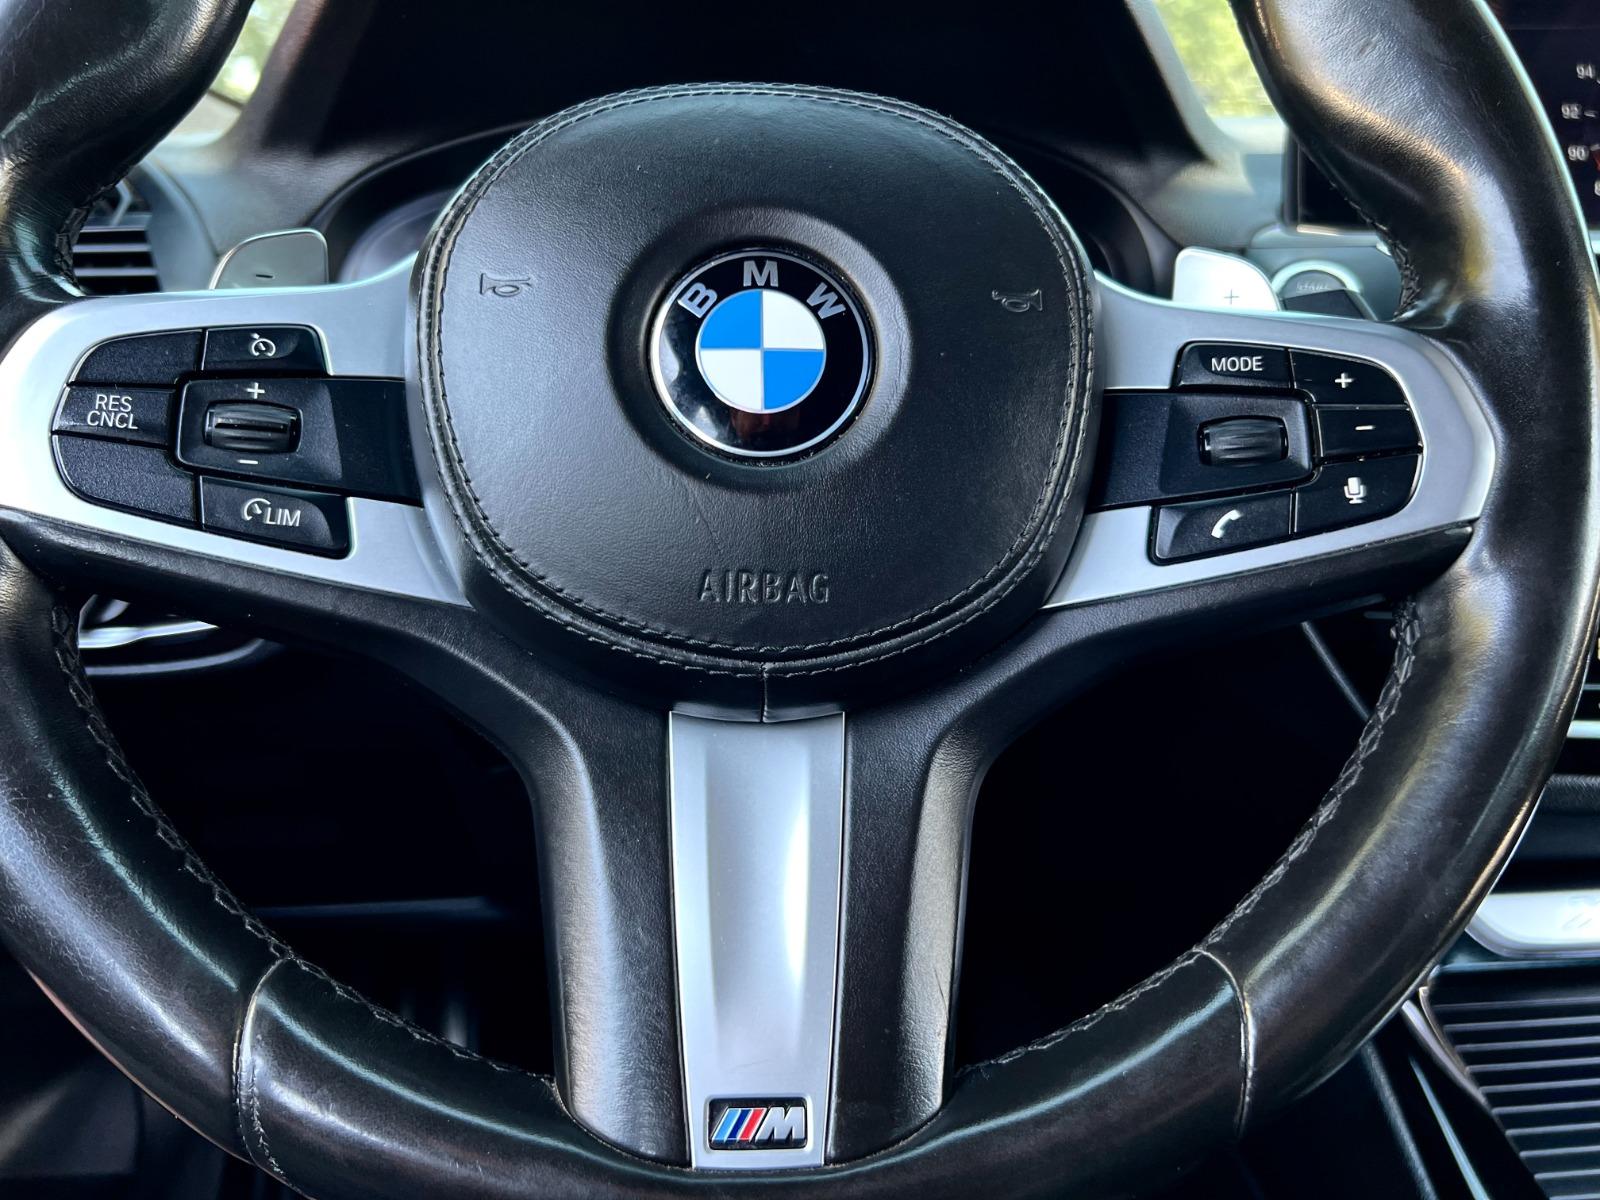 BMW X3 SPORT 2019 30i xDRIVE - FULL MOTOR